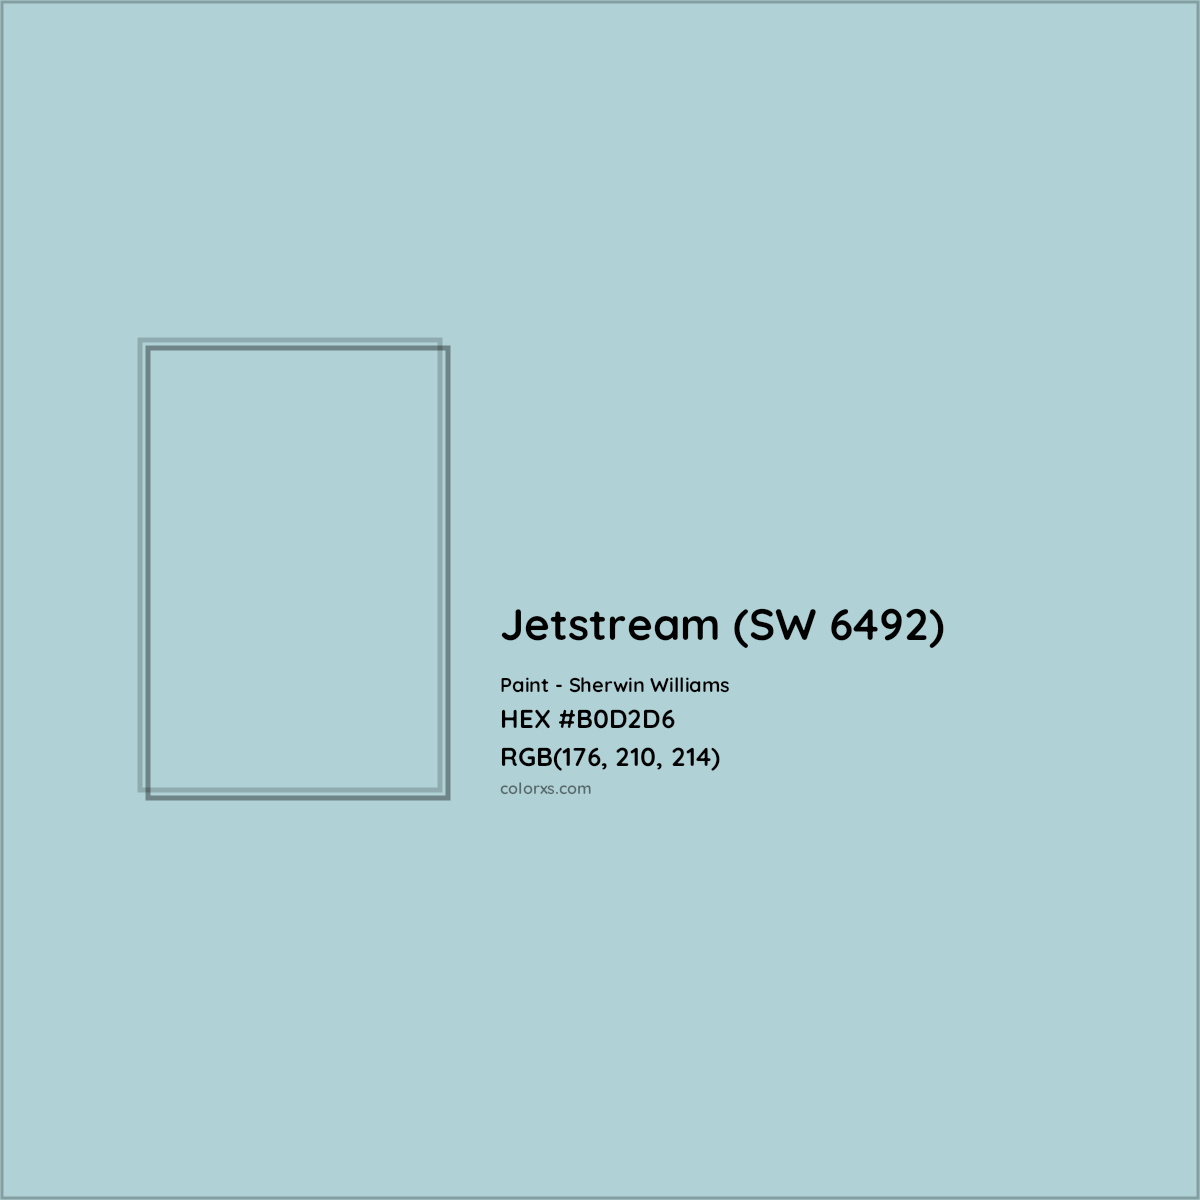 HEX #B0D2D6 Jetstream (SW 6492) Paint Sherwin Williams - Color Code